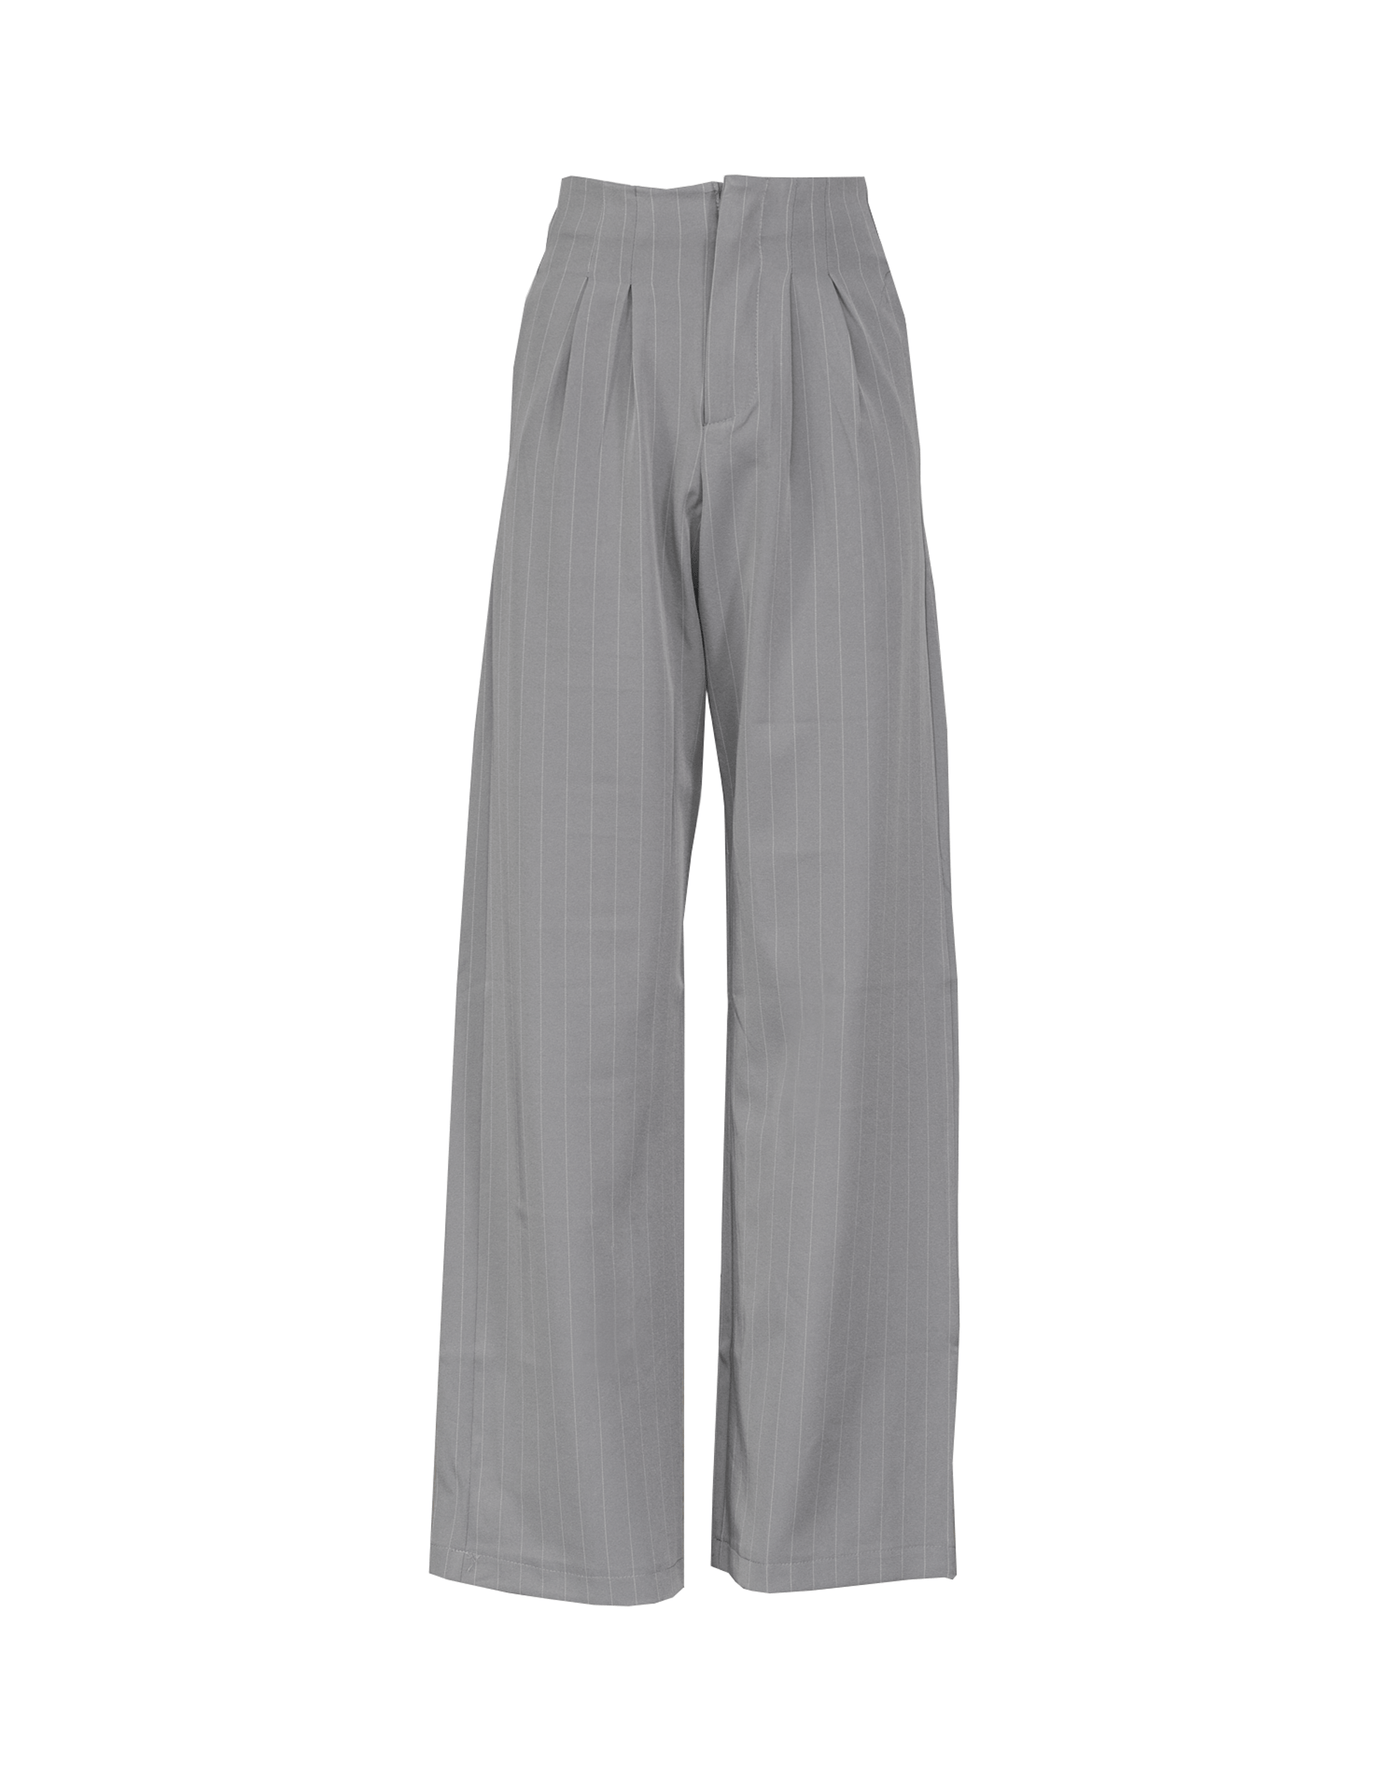 New Girl Pants (Grey Pinstripe) - Grey Pinstripe High Waisted Pants - Women's Pants - Charcoal Clothing